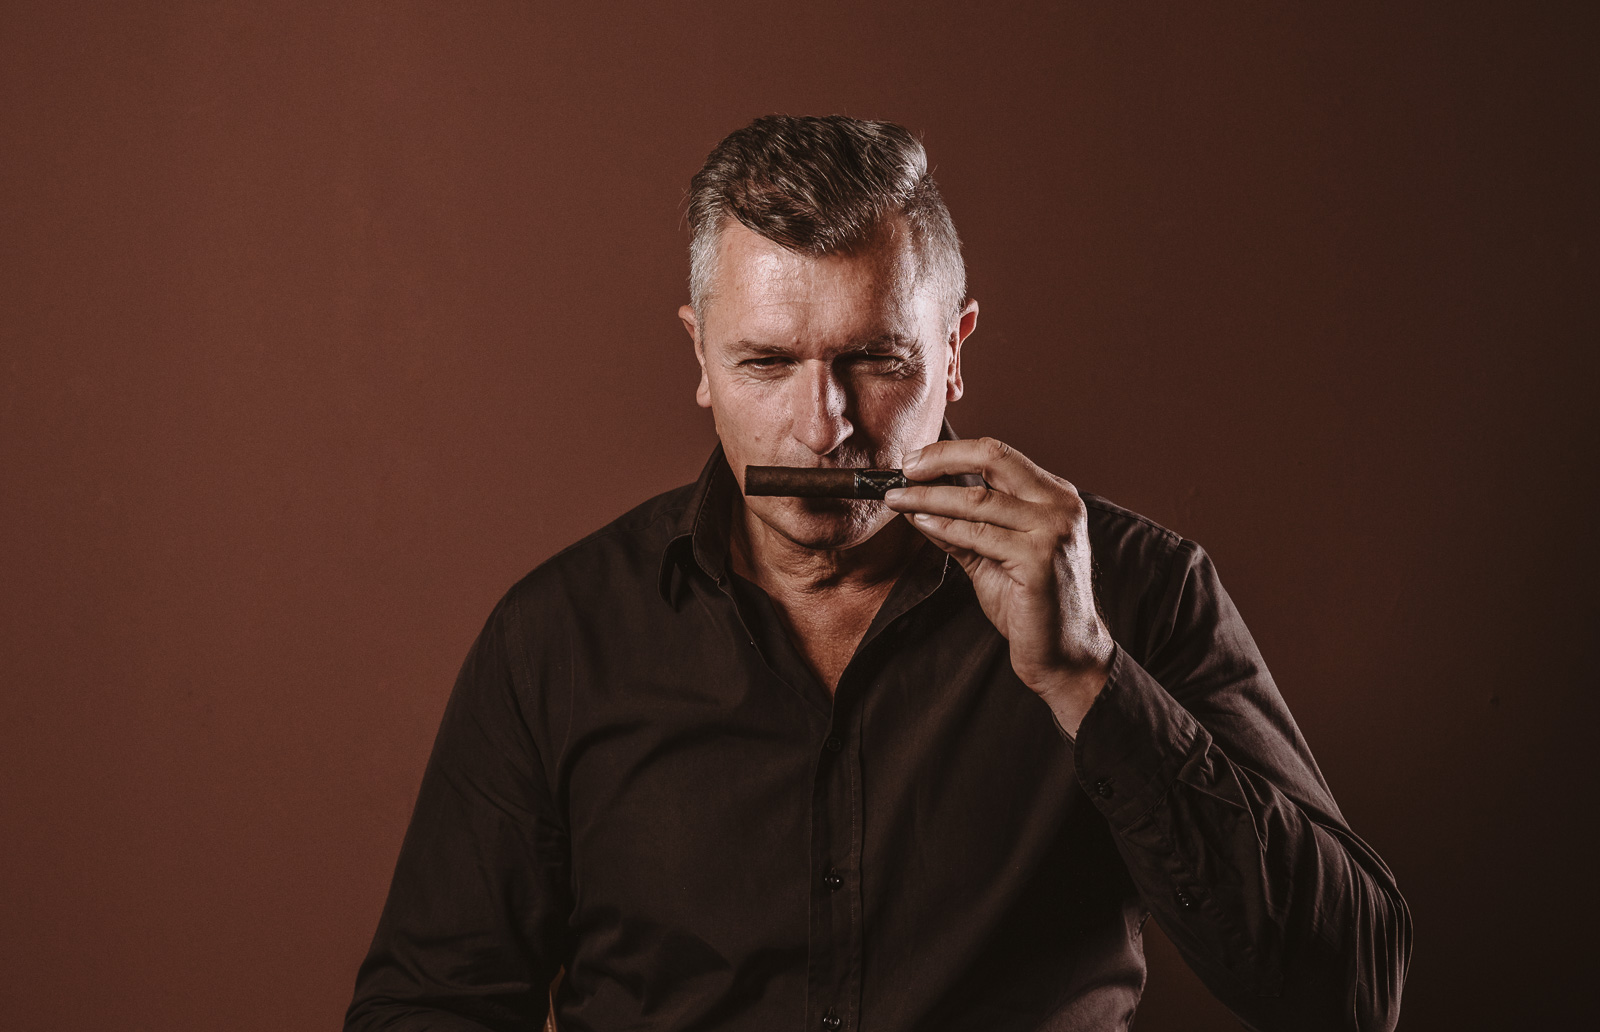 Porträtshooting - Gilbert Köhne vom Konzeptstore Herzblut riecht an Zigarre